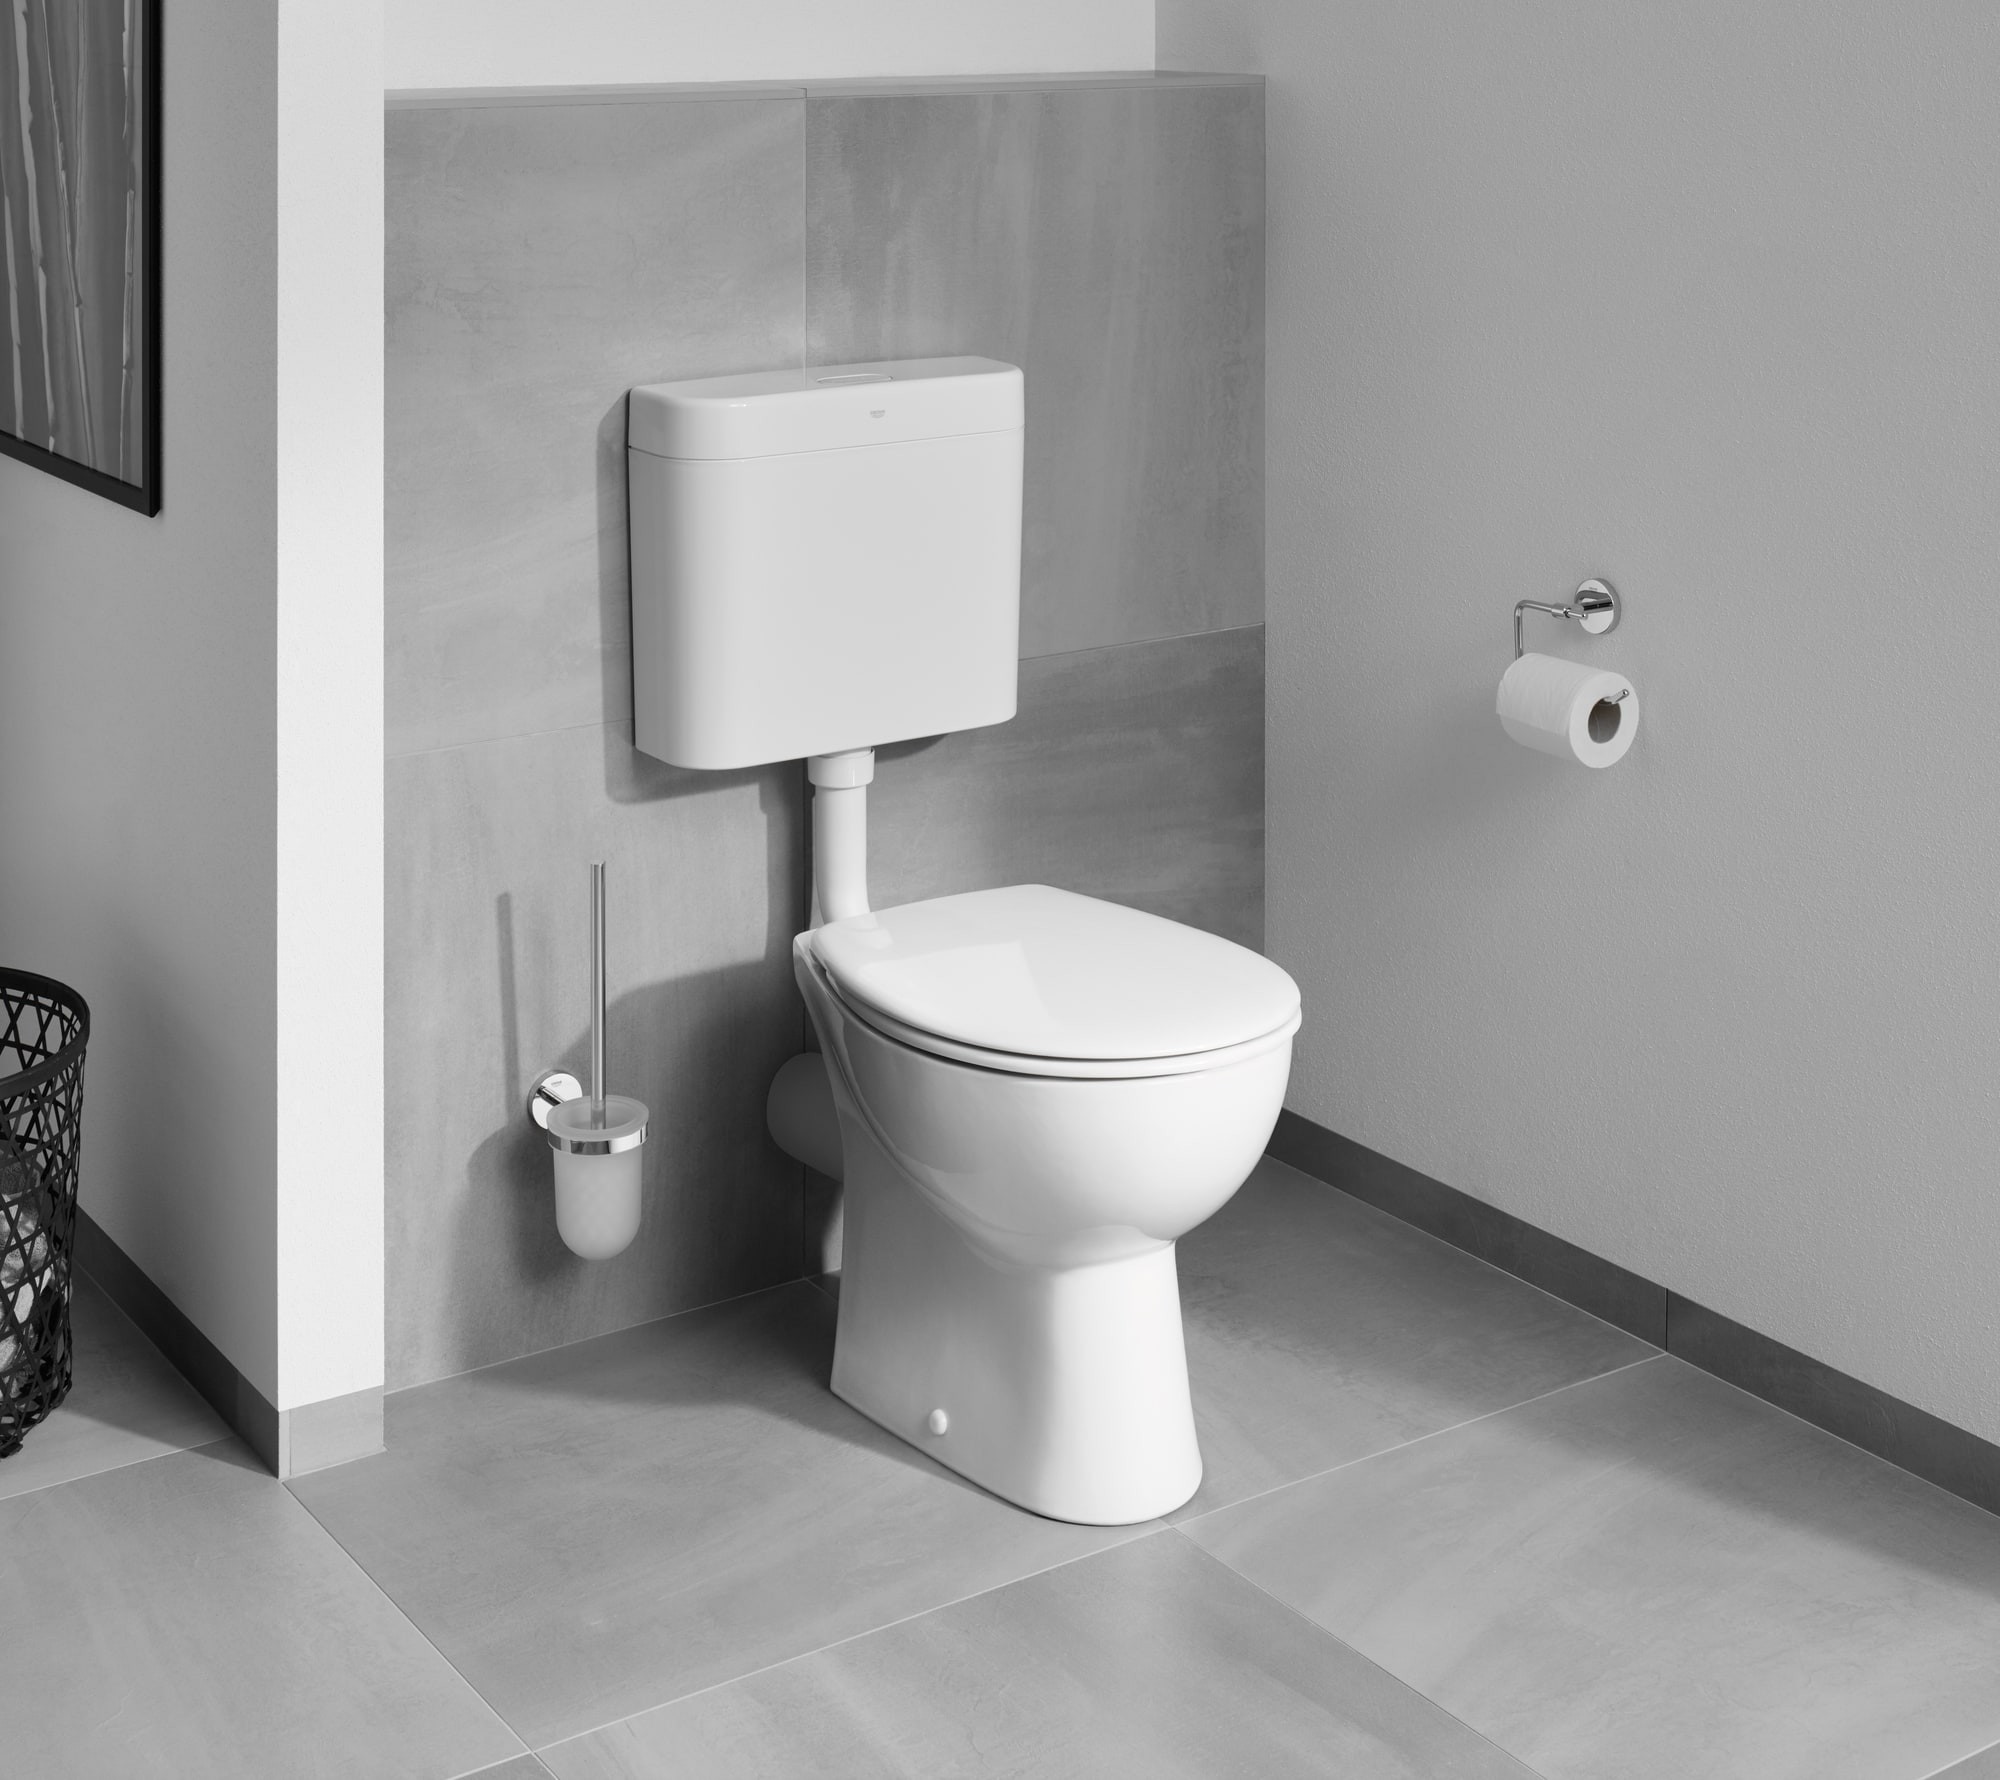  GROHE  Bau  Ceramic  WC Sitz  mit  Absenkautomatik  abnehmbar 